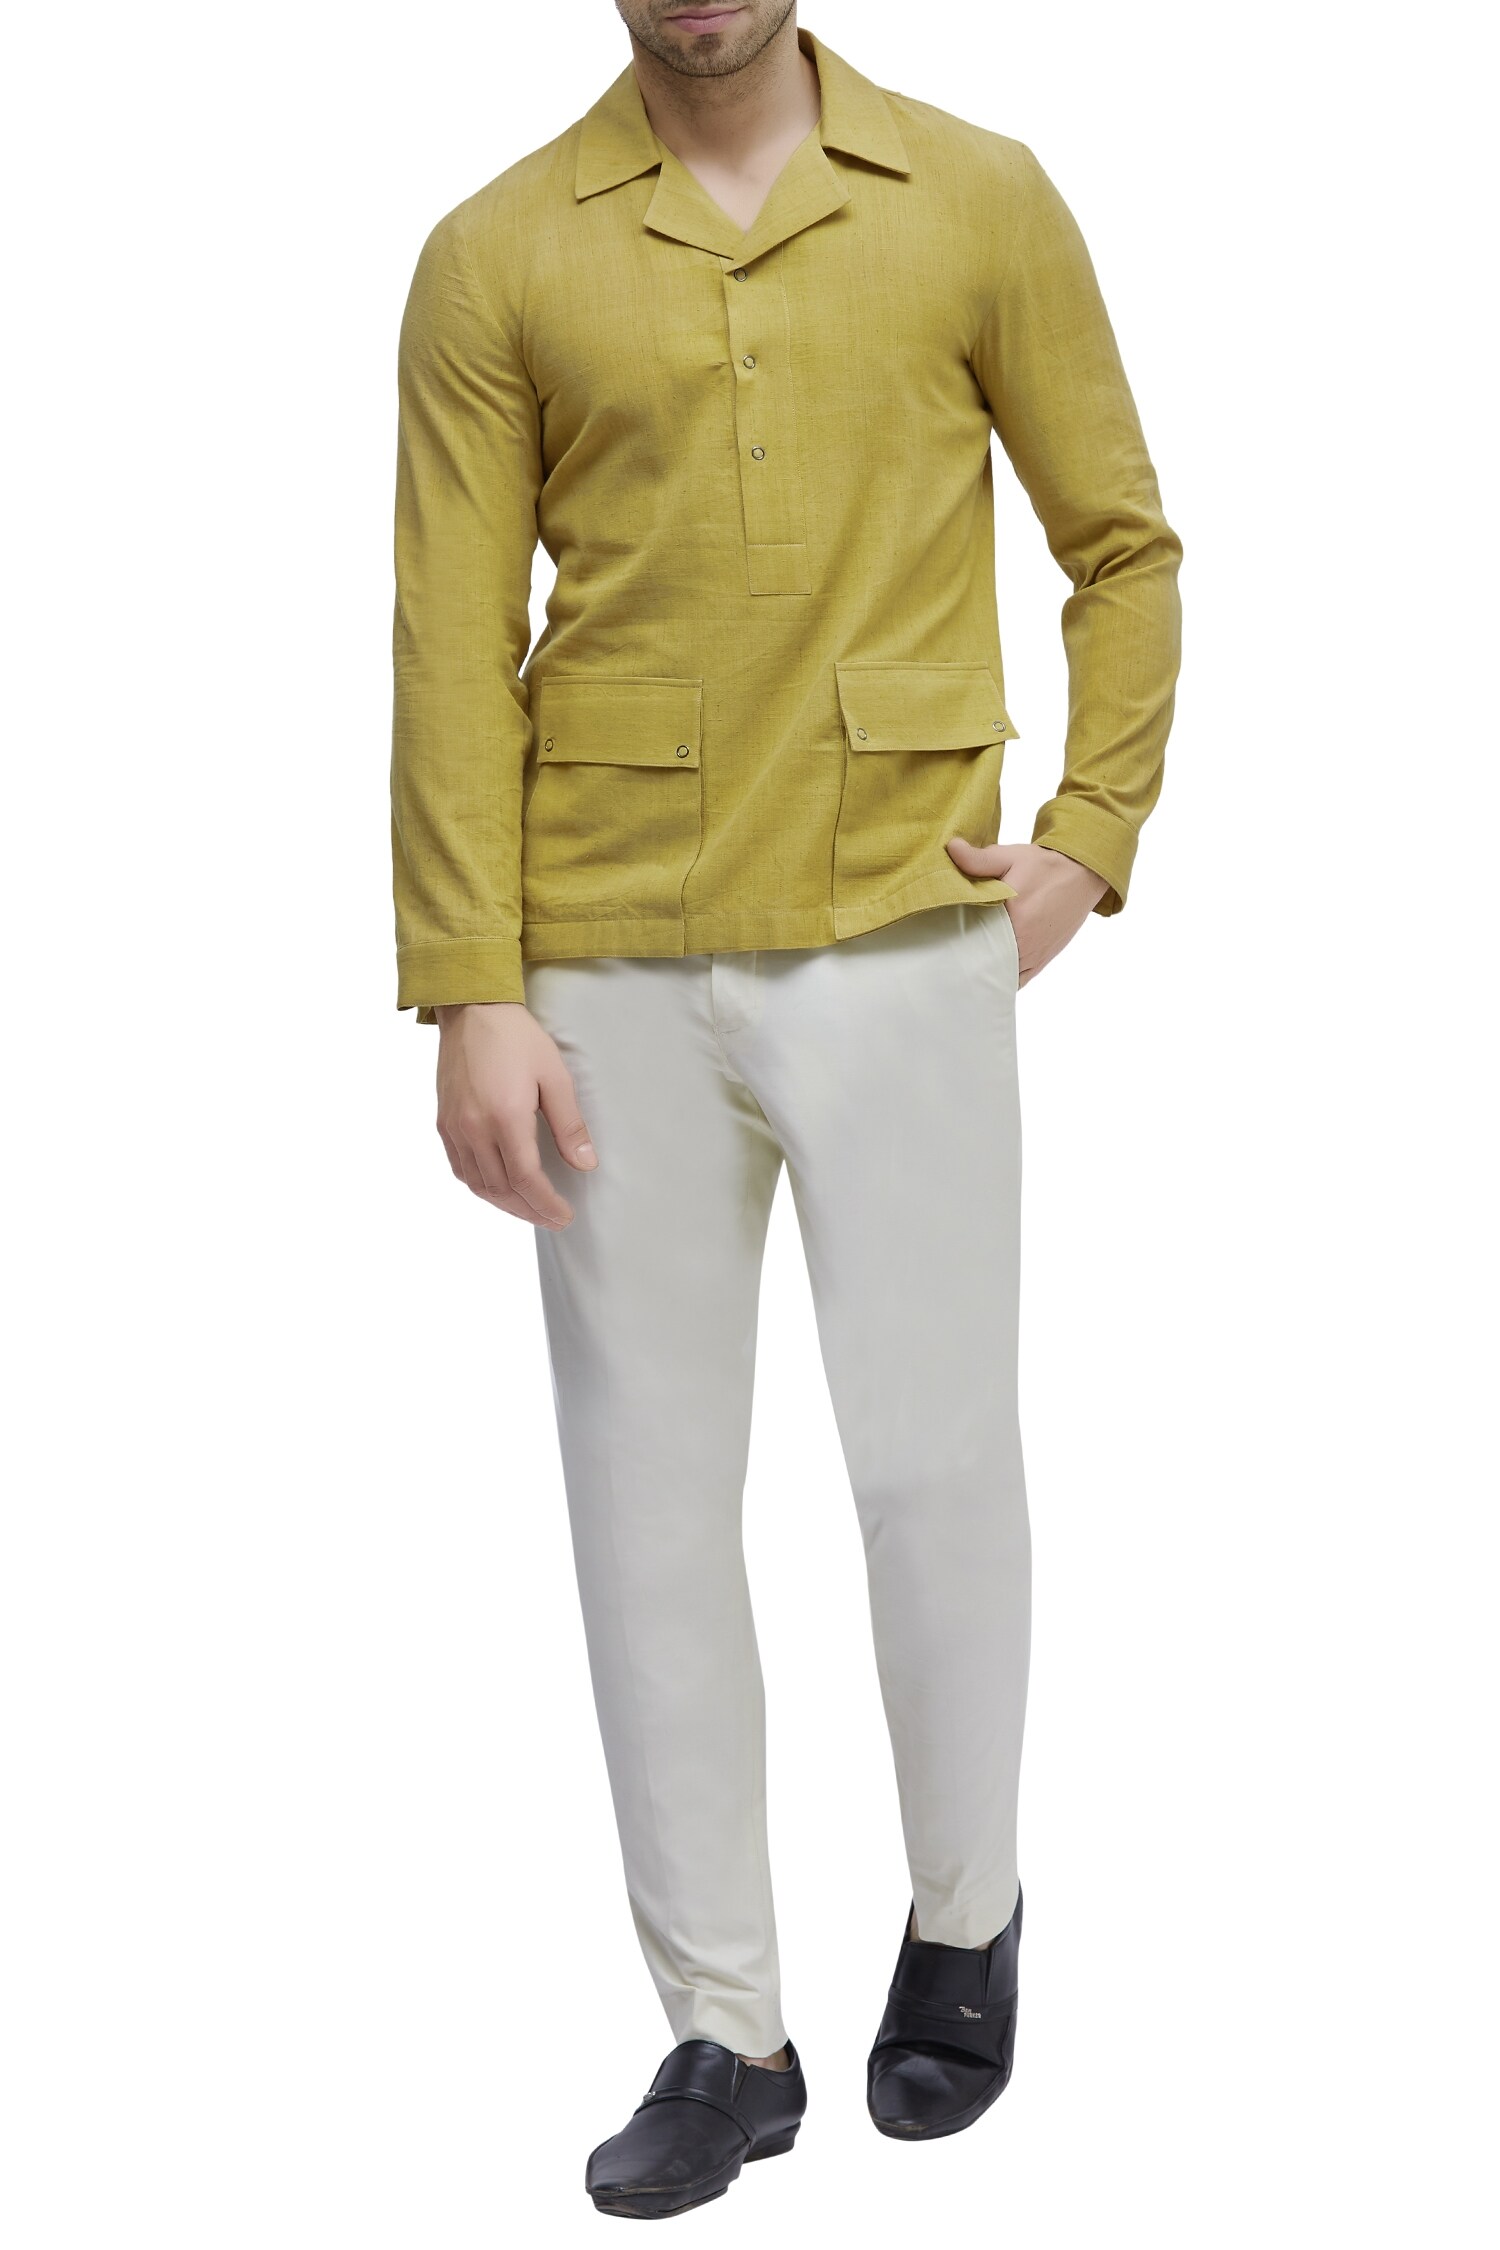 Dhruv Vaish Yellow Handloom Cotton Shirt For Men